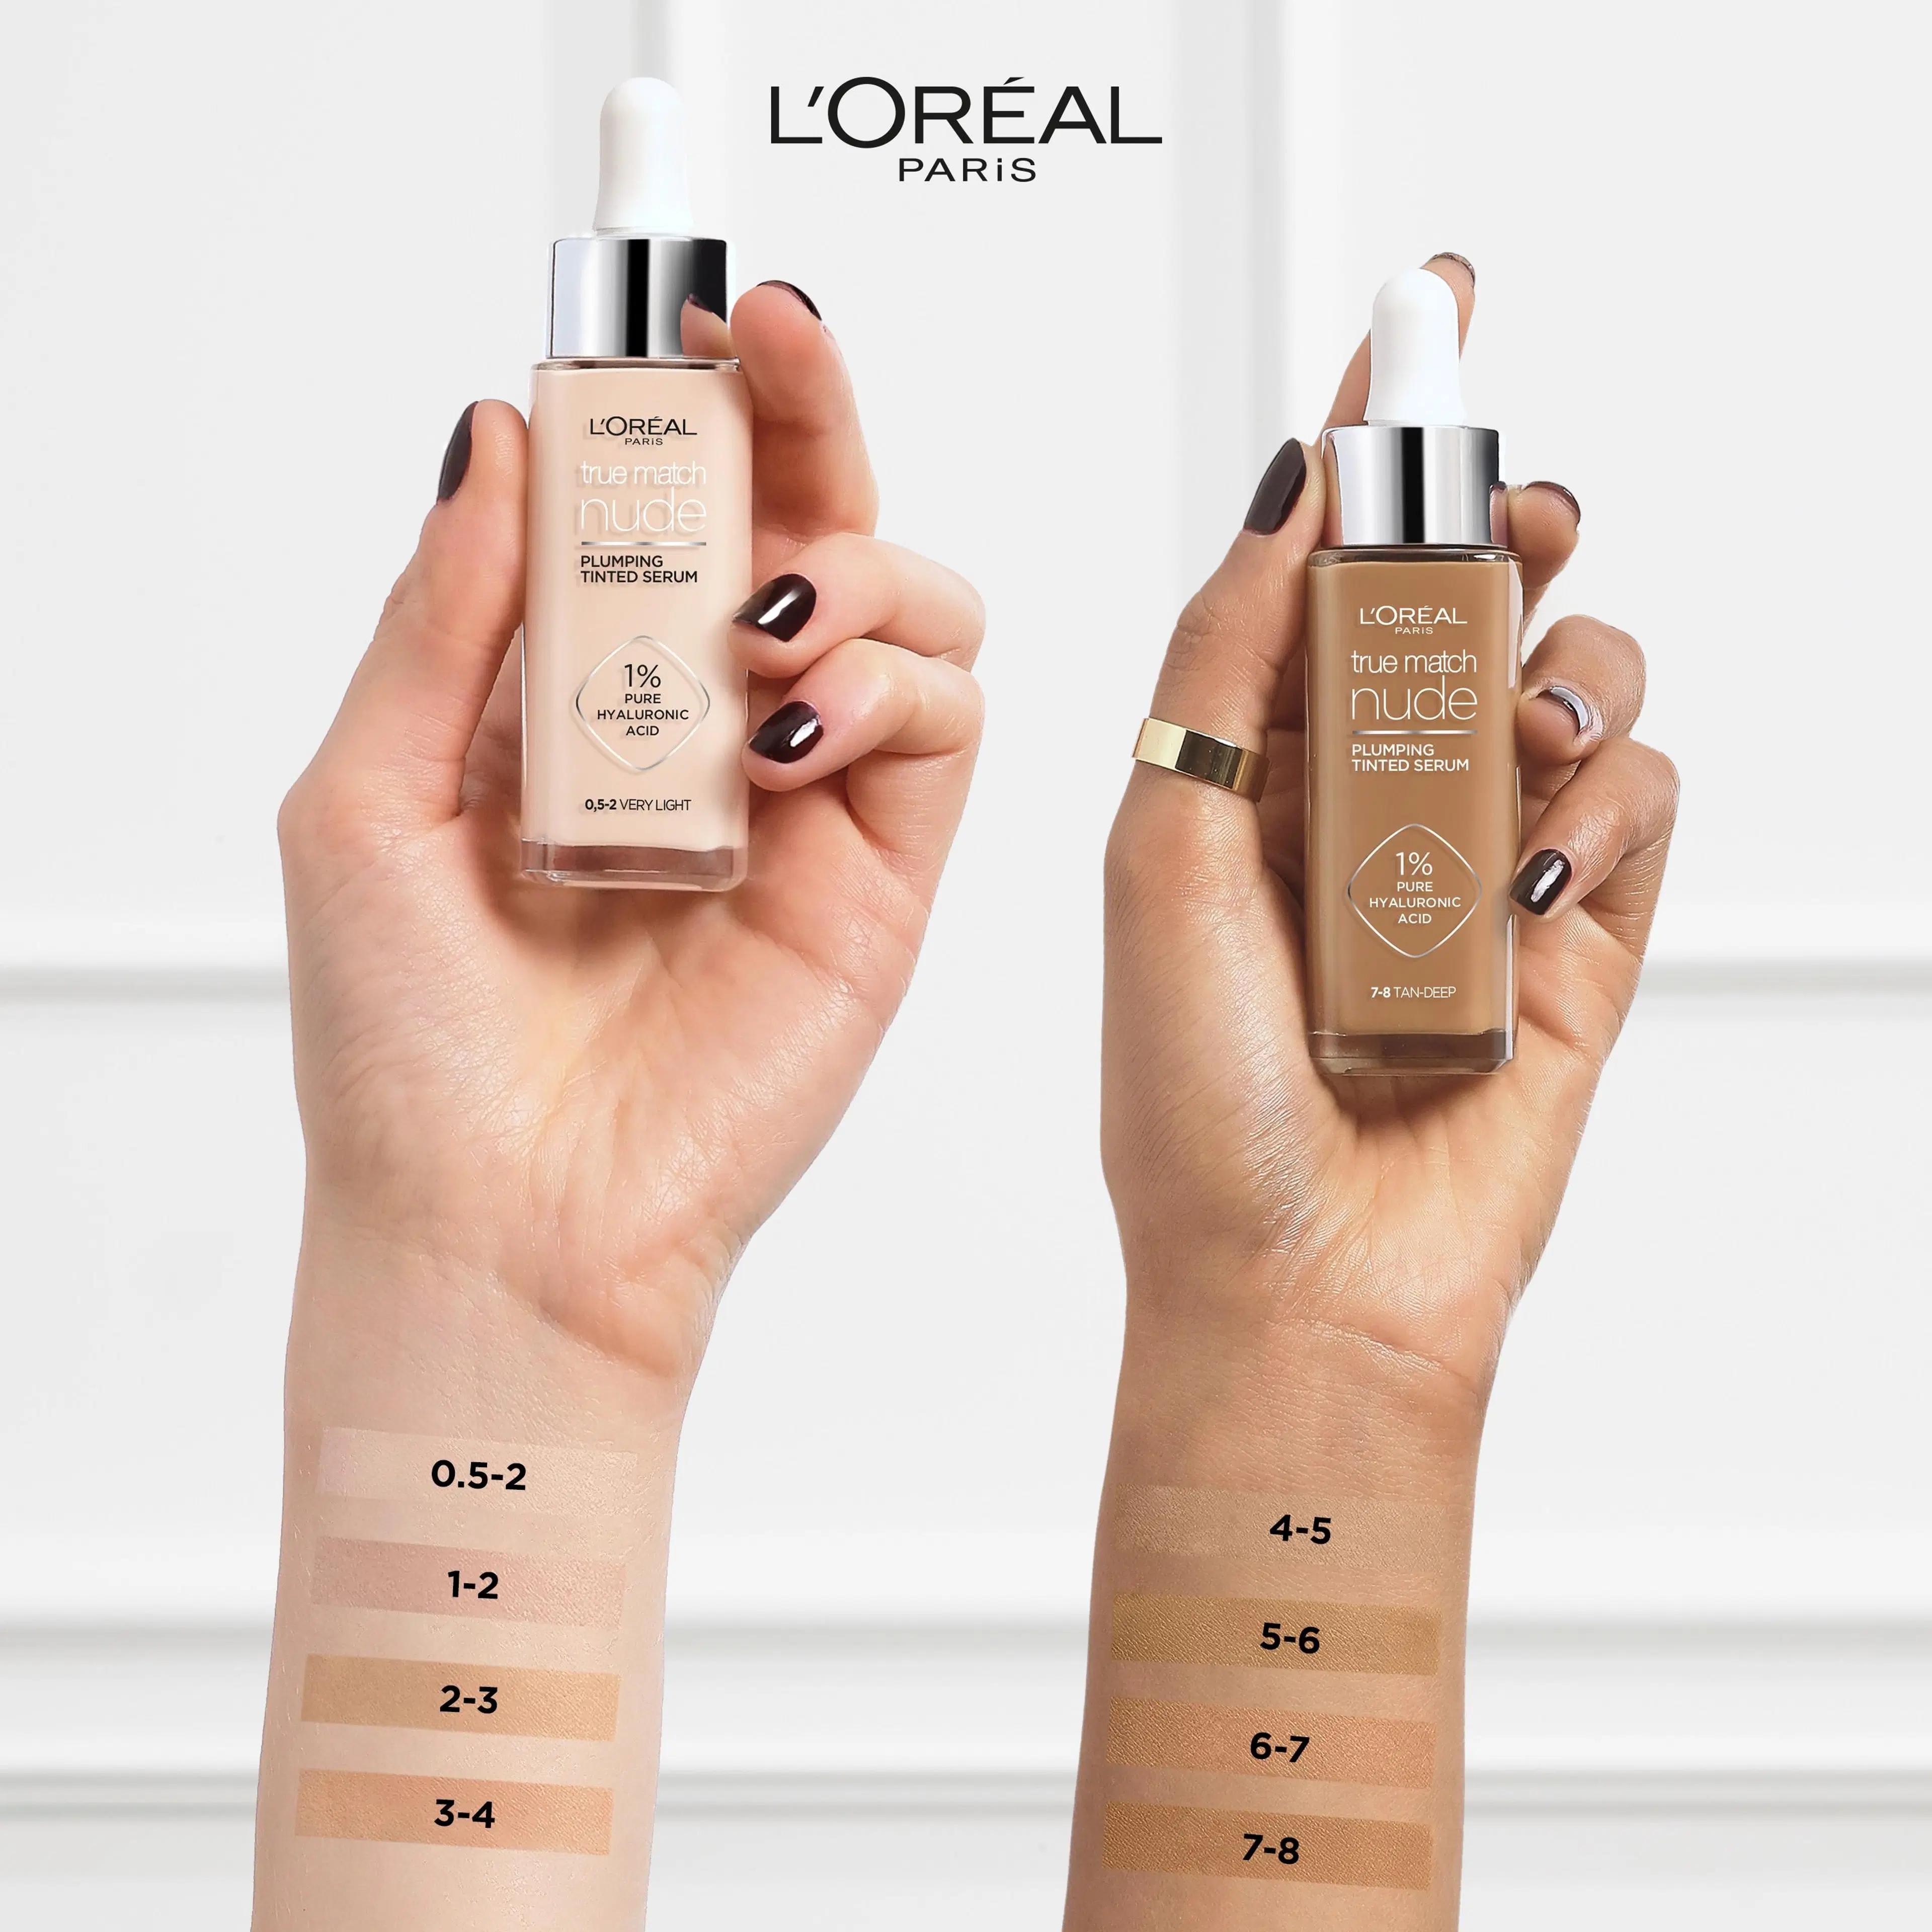 L'Oréal Paris True Match Nude Plumping Tinted Serum Tan6-7 meikkivoide 30ml